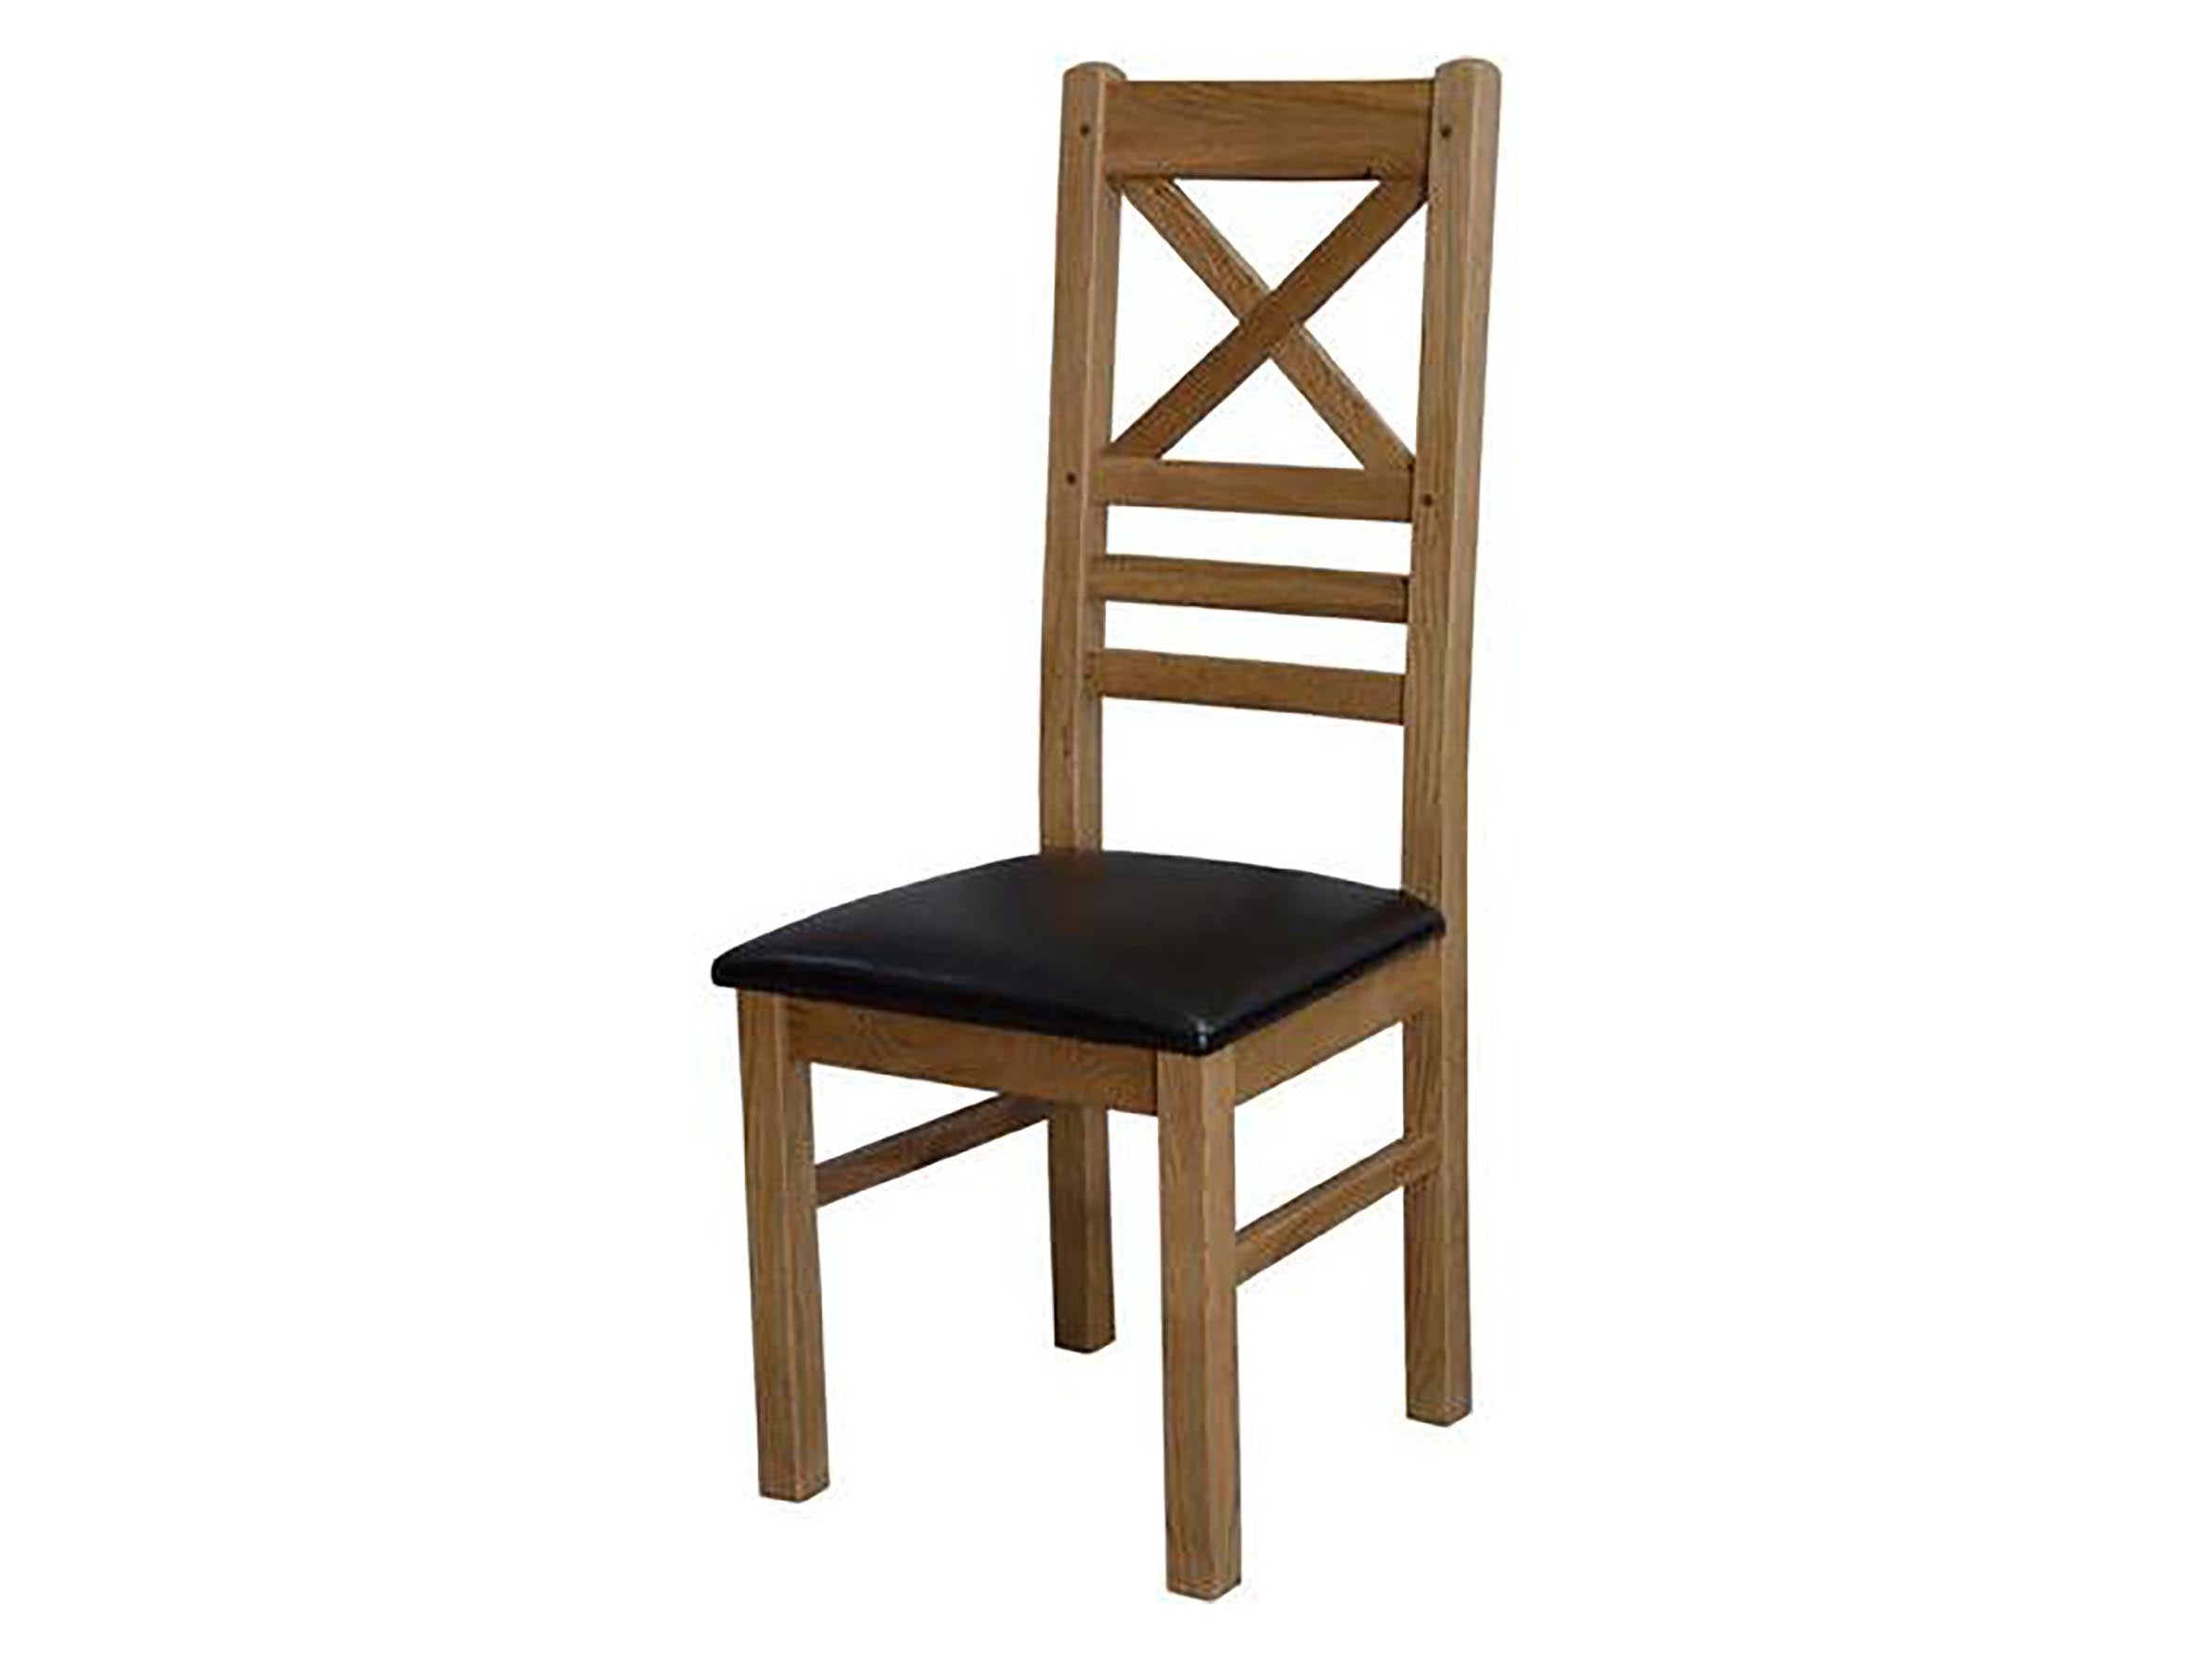 Dalton Cross Back Dining Chair - 100% solid oak furniture